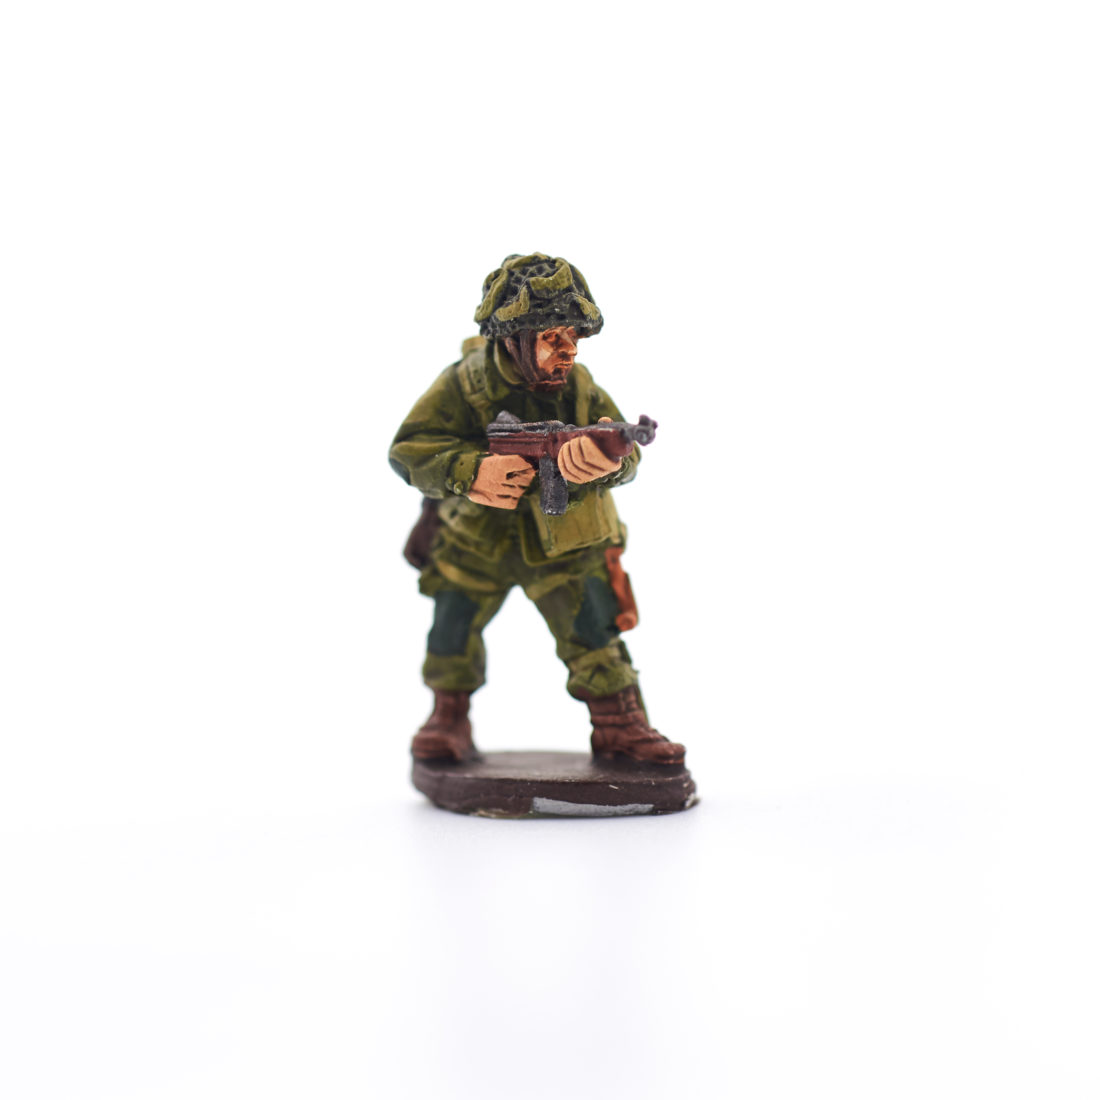 Free stock image of Miniature Figure